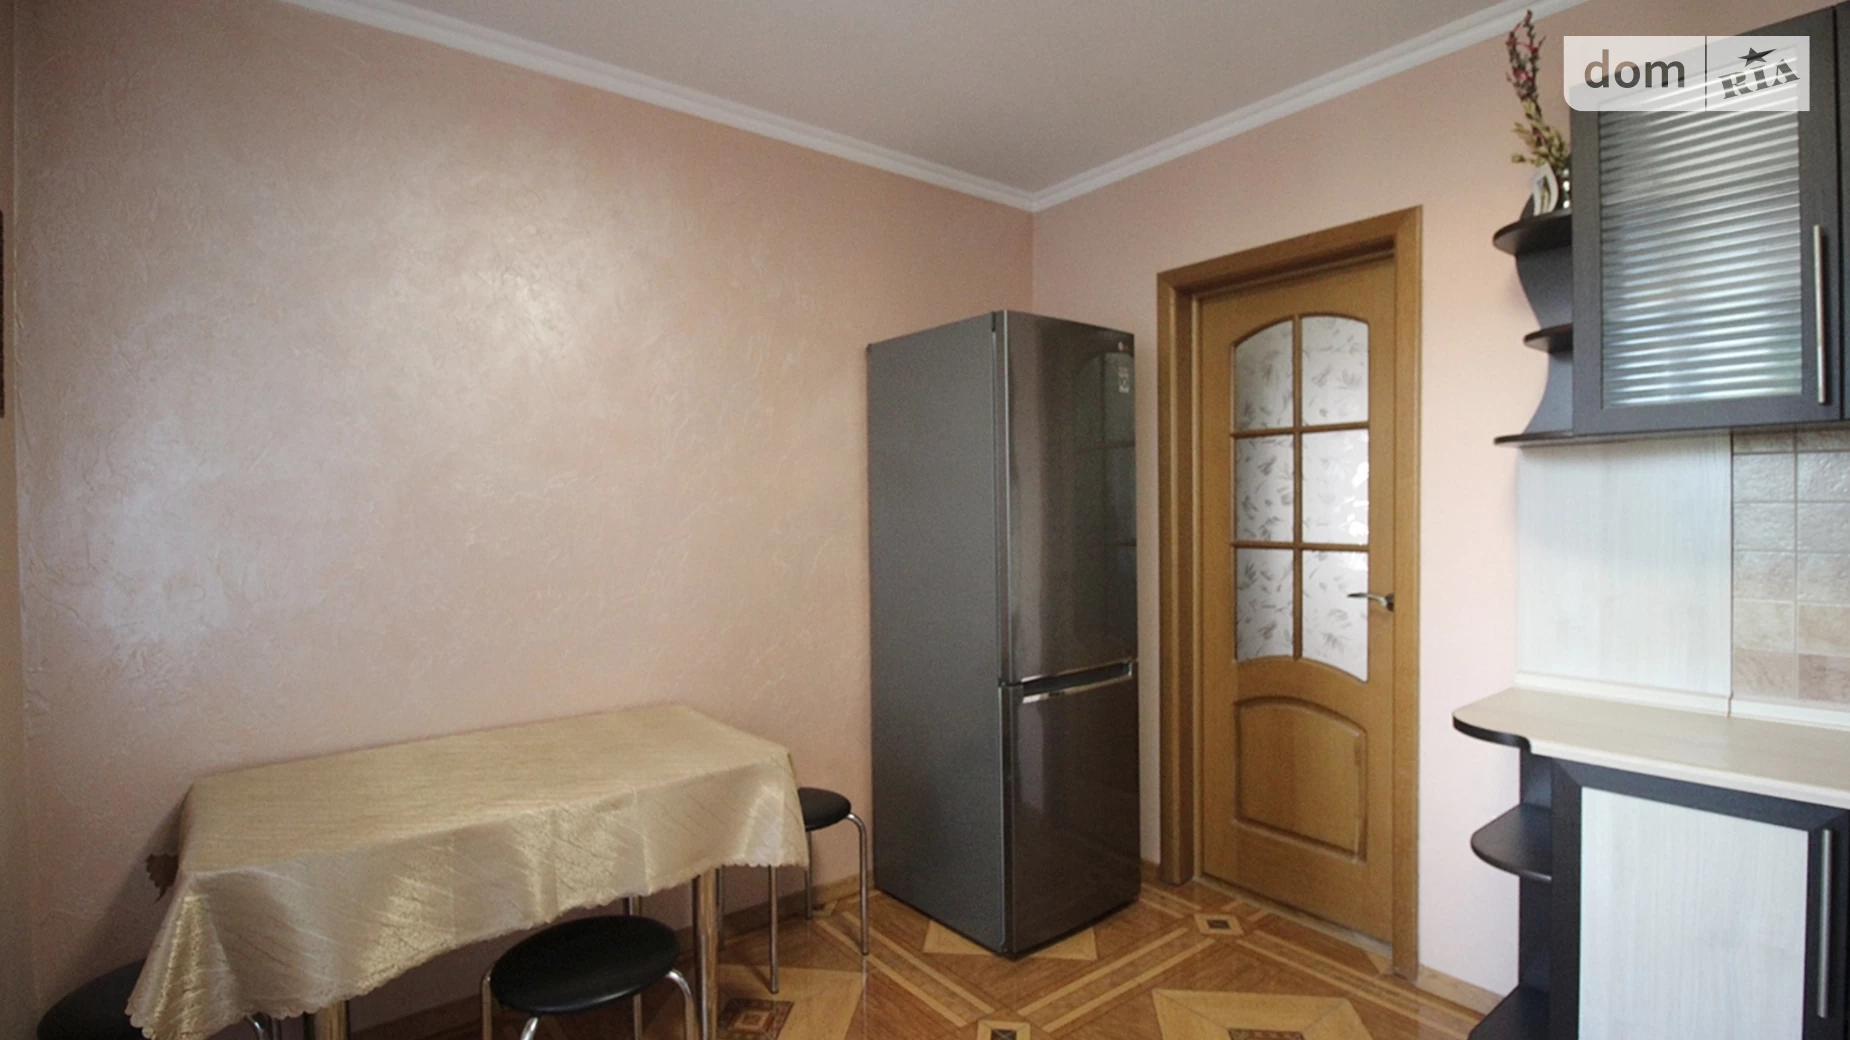 Продается 3-комнатная квартира 87.5 кв. м в Ивано-Франковске, вул. Шухевичив - фото 4